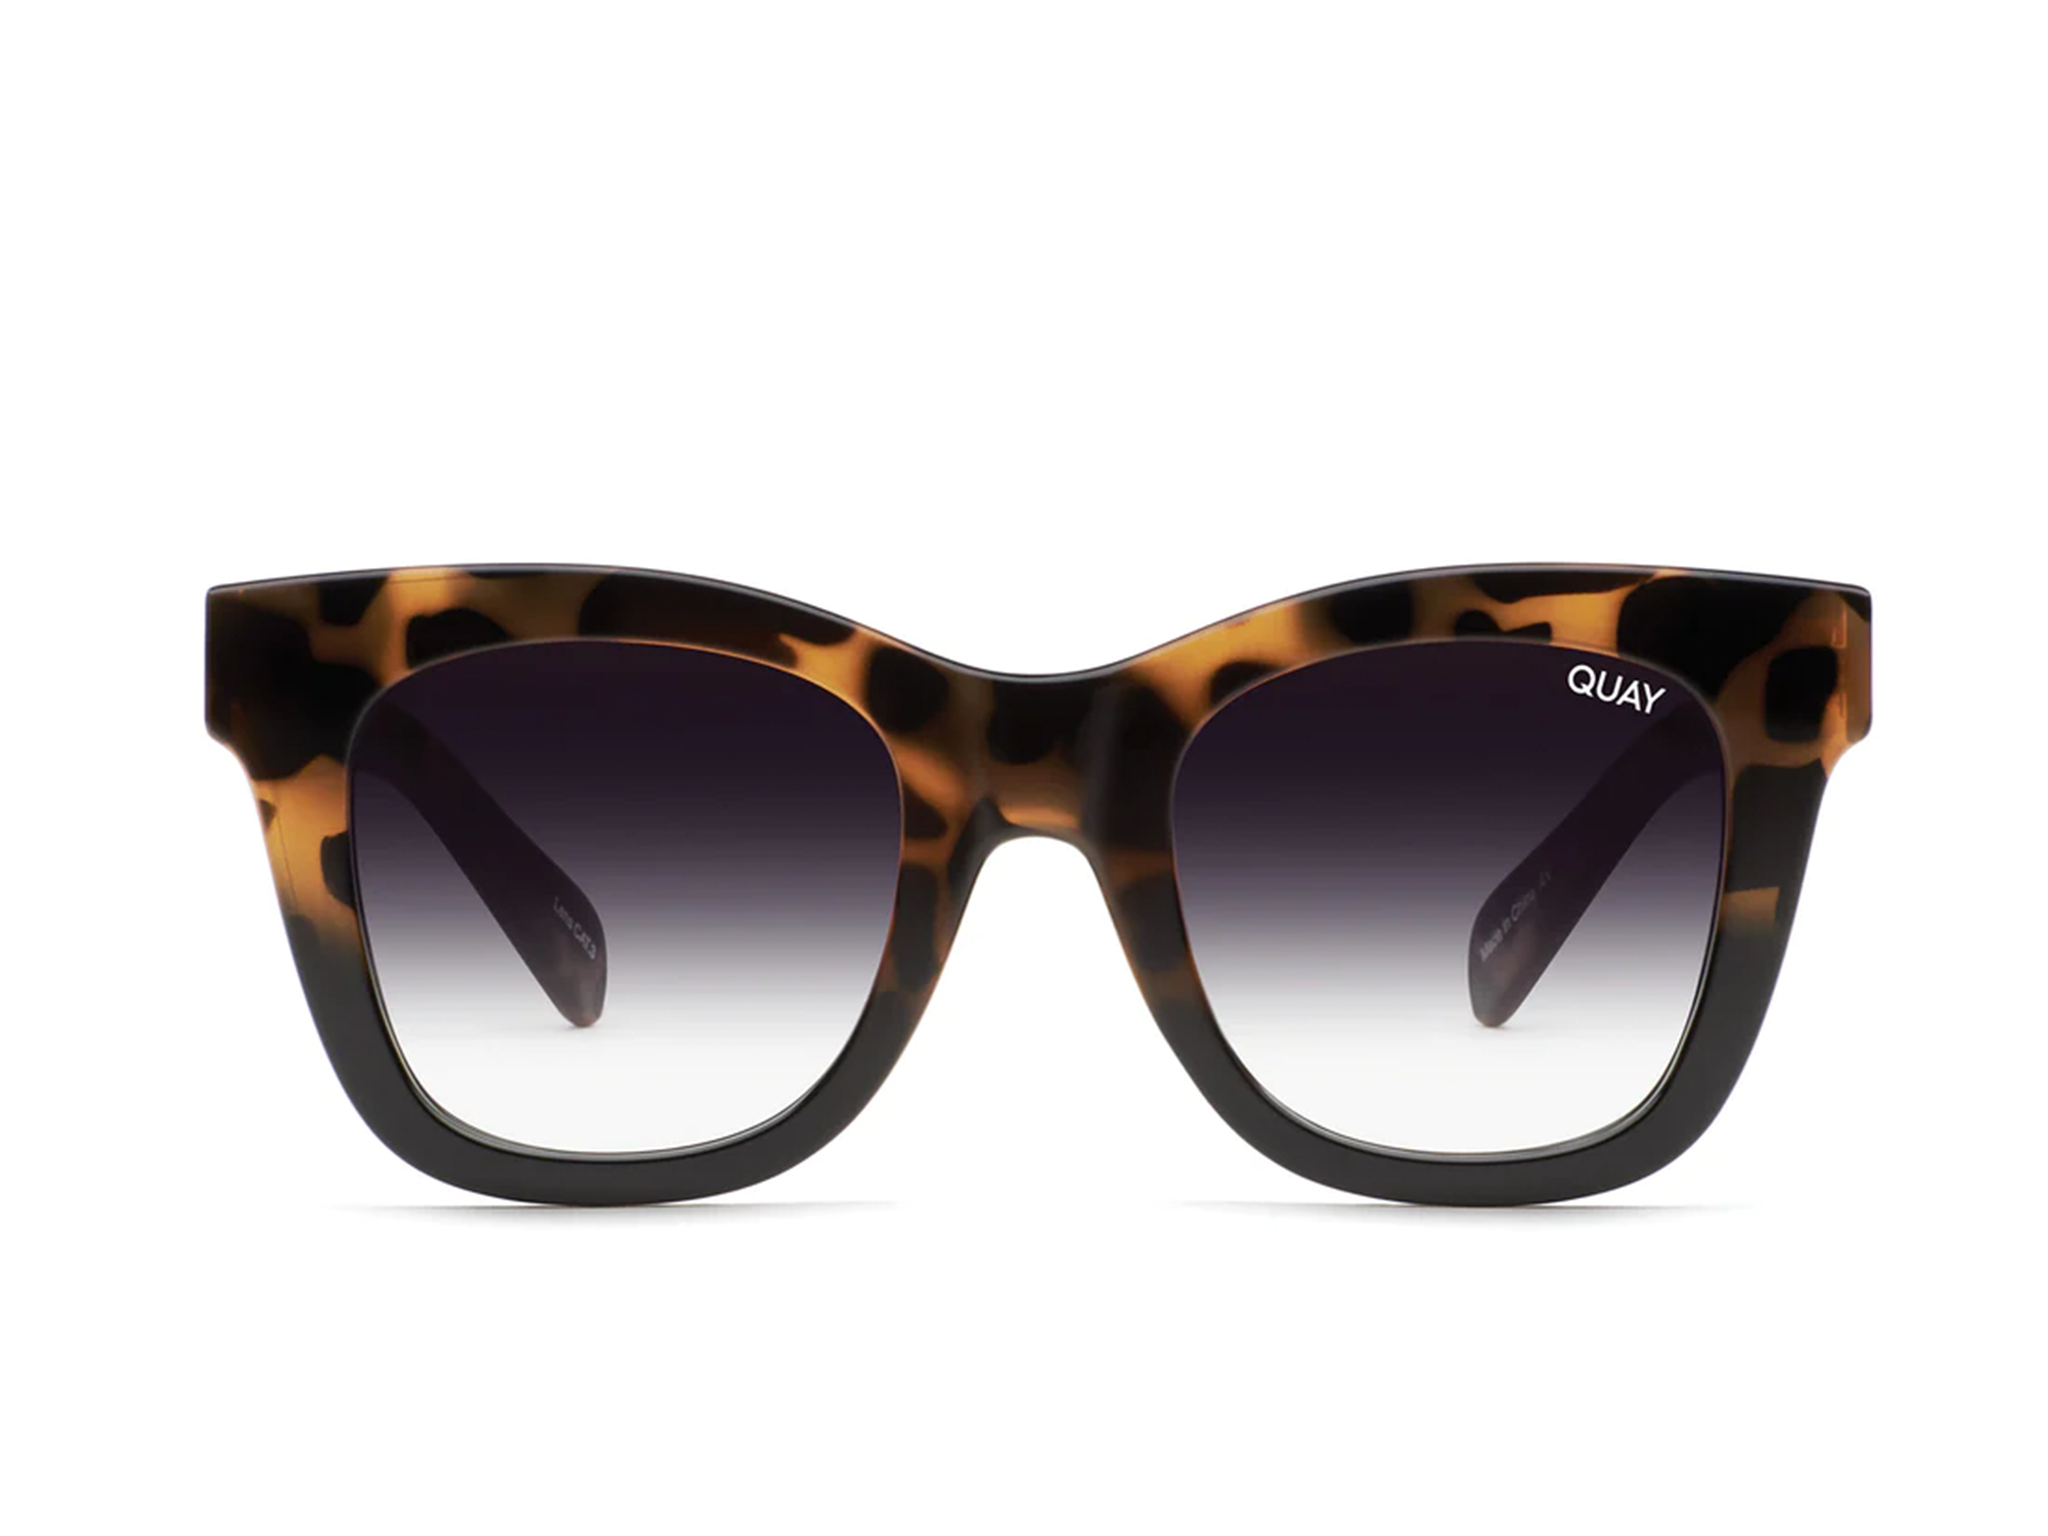 The Ashley Graham x Quay Sunglasses Collab Has A Charitable Mission